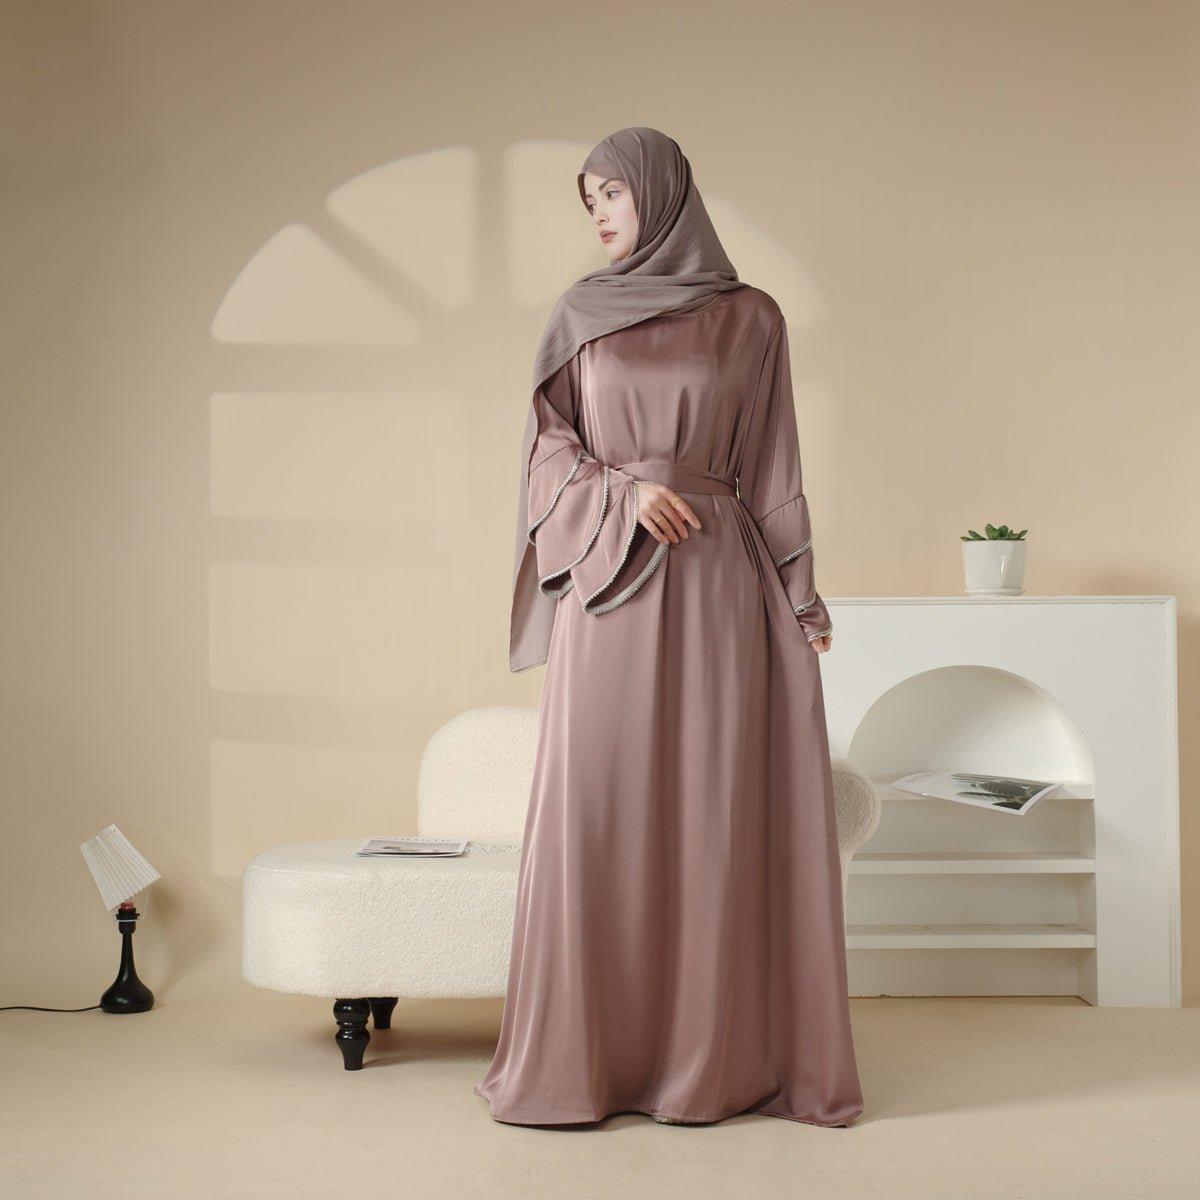 MA040 Ruffle Sleeve Diamond Satin Pocket Abaya - Mariam's Collection